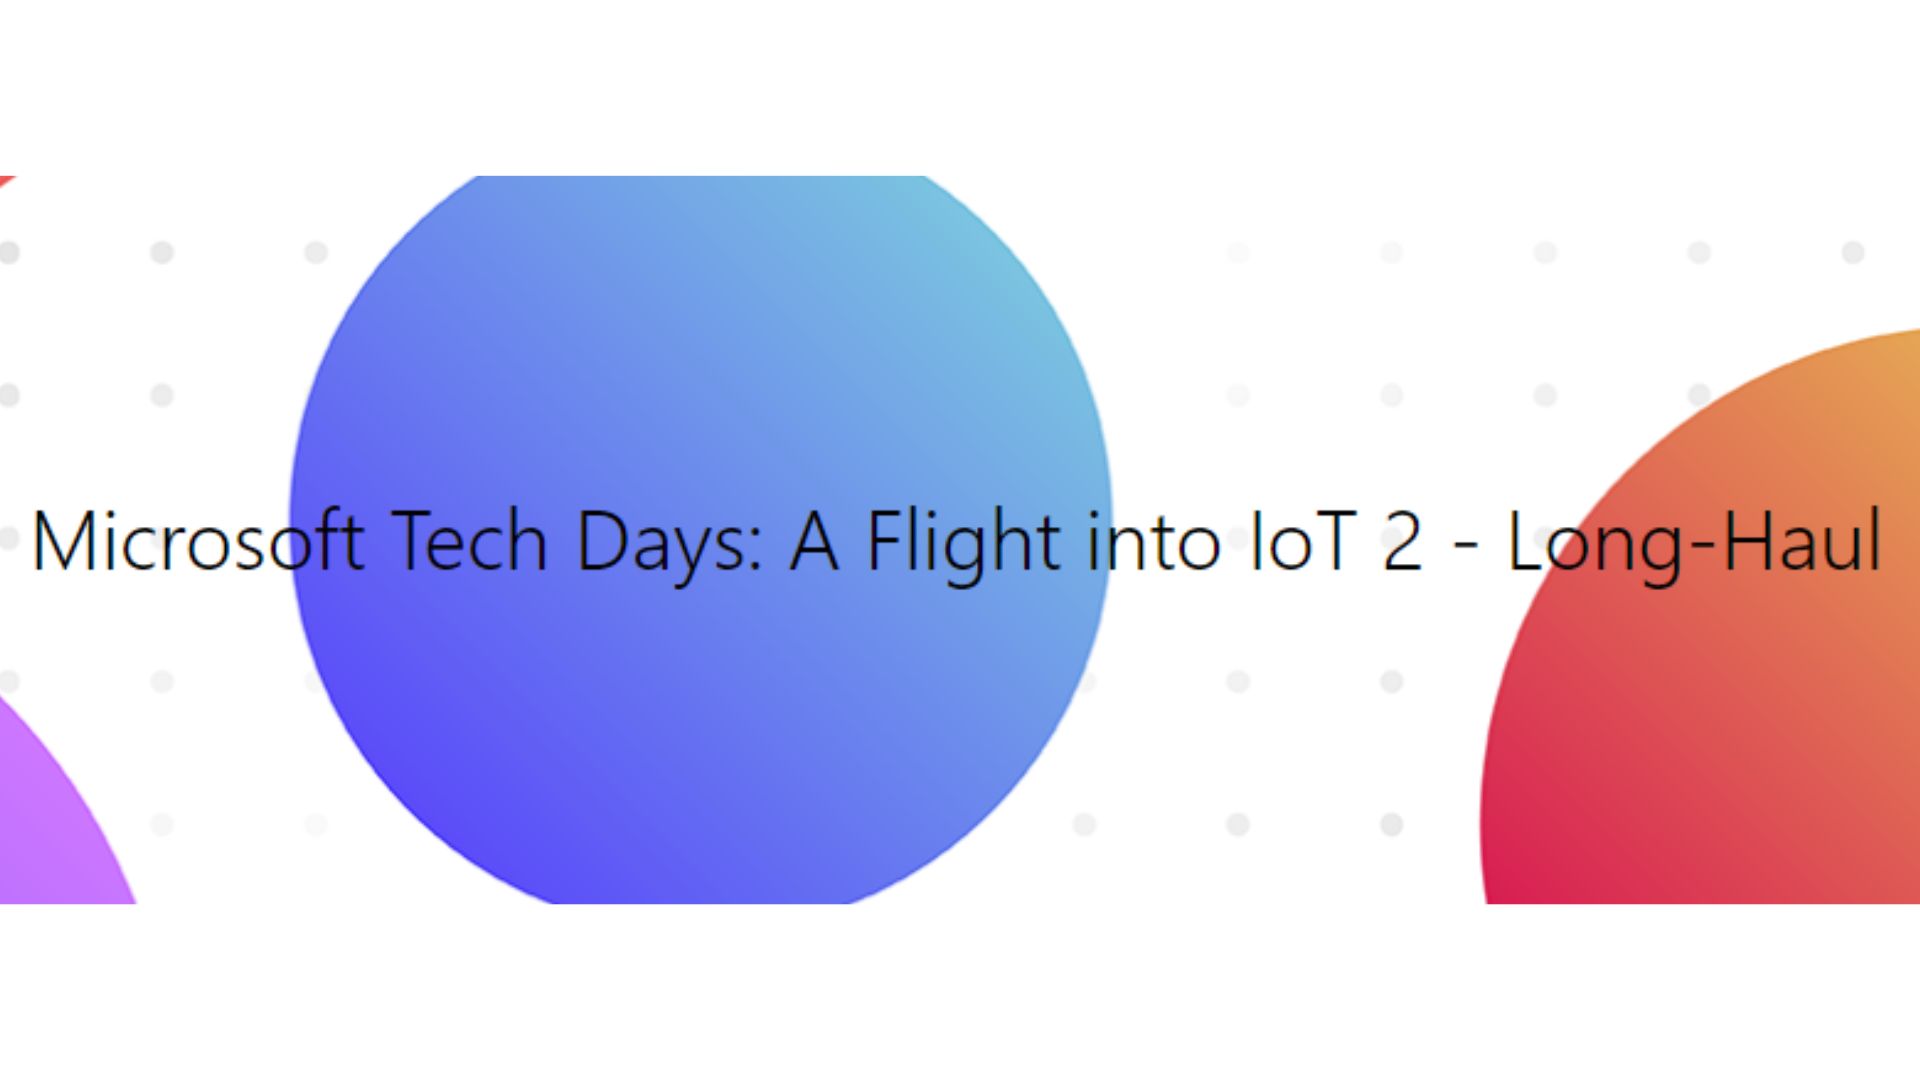 Microsoft Tech Days: A Flight into IoT 2 - Long-Haul